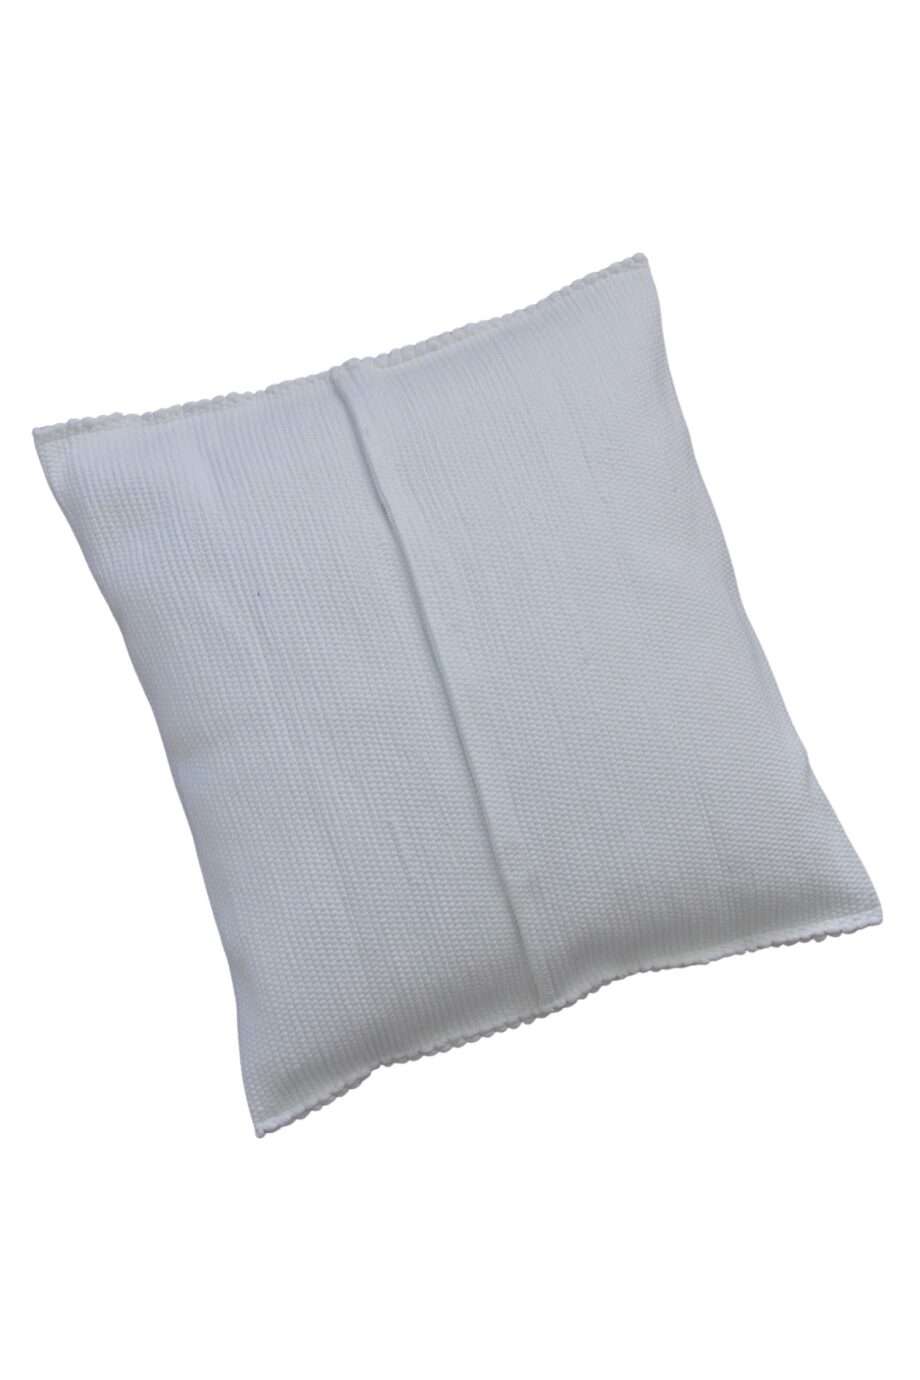 marigold off-white woven cotton pillowcase medium